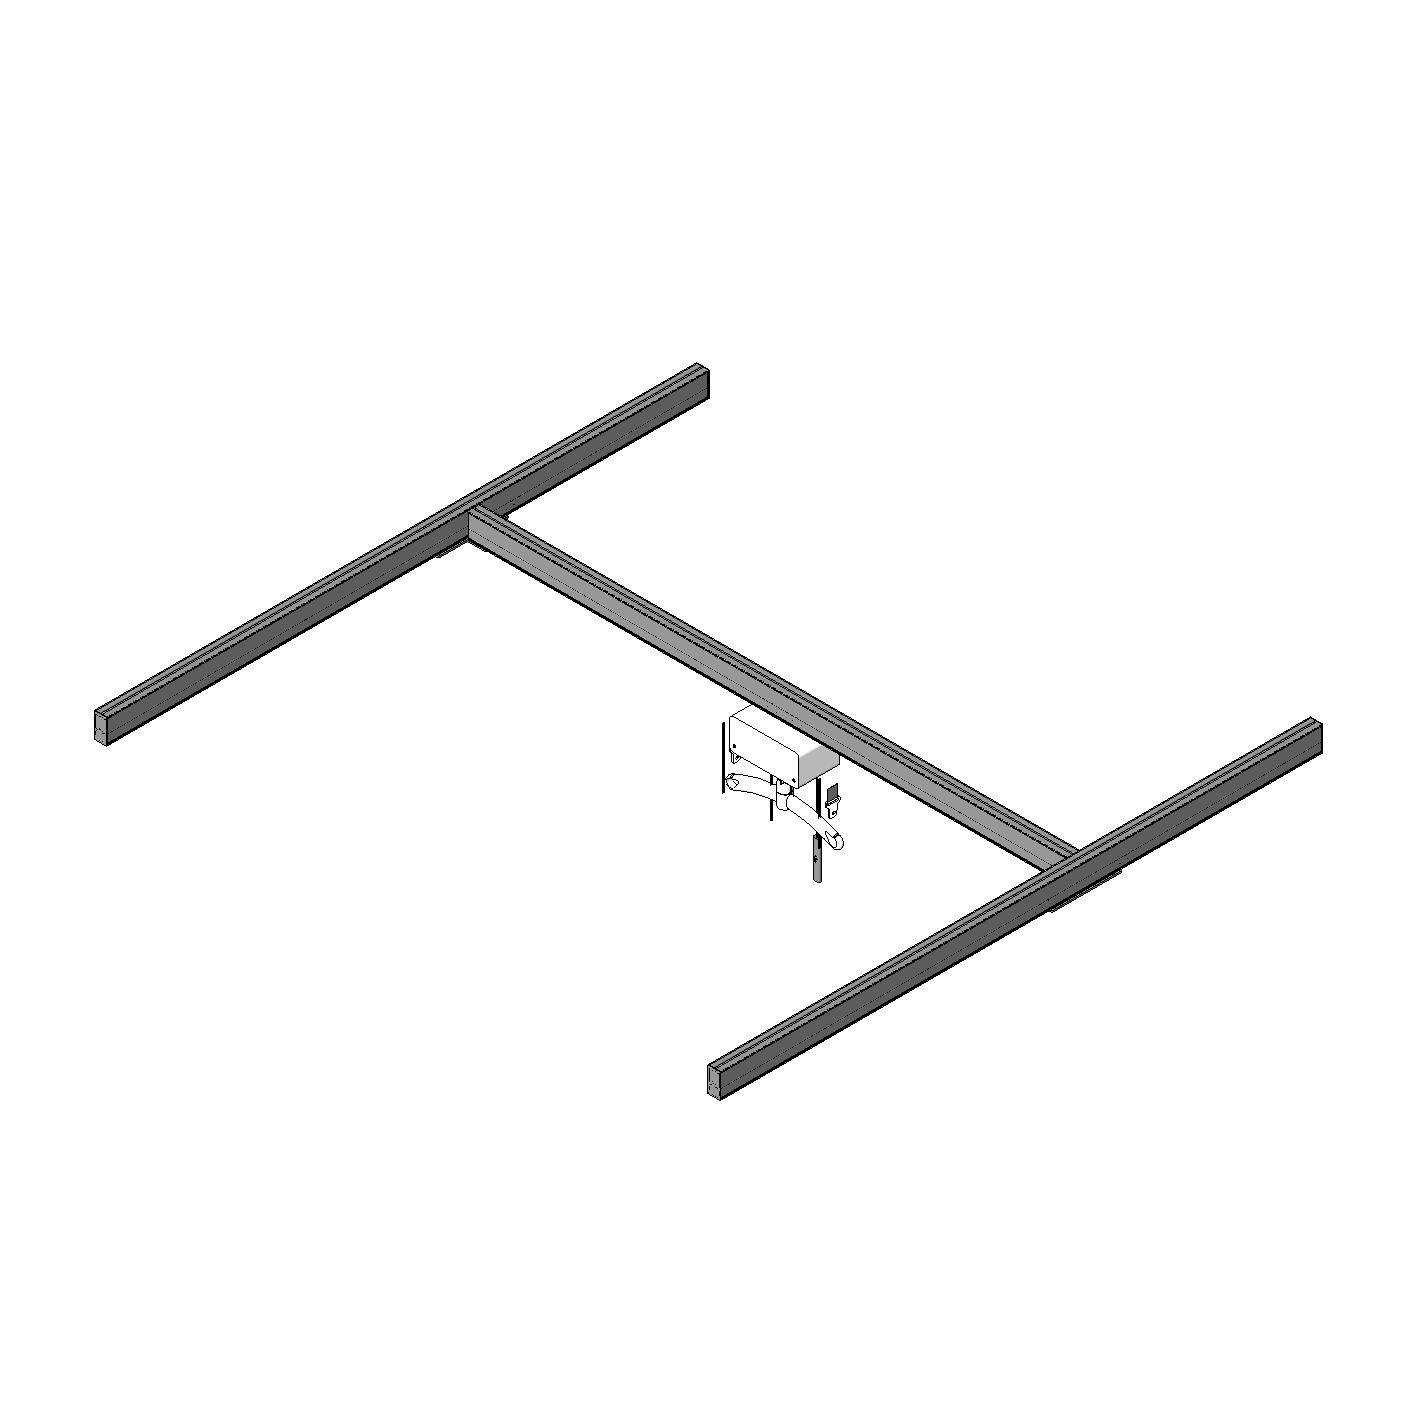 Ceiling Track Hoist - System Type B